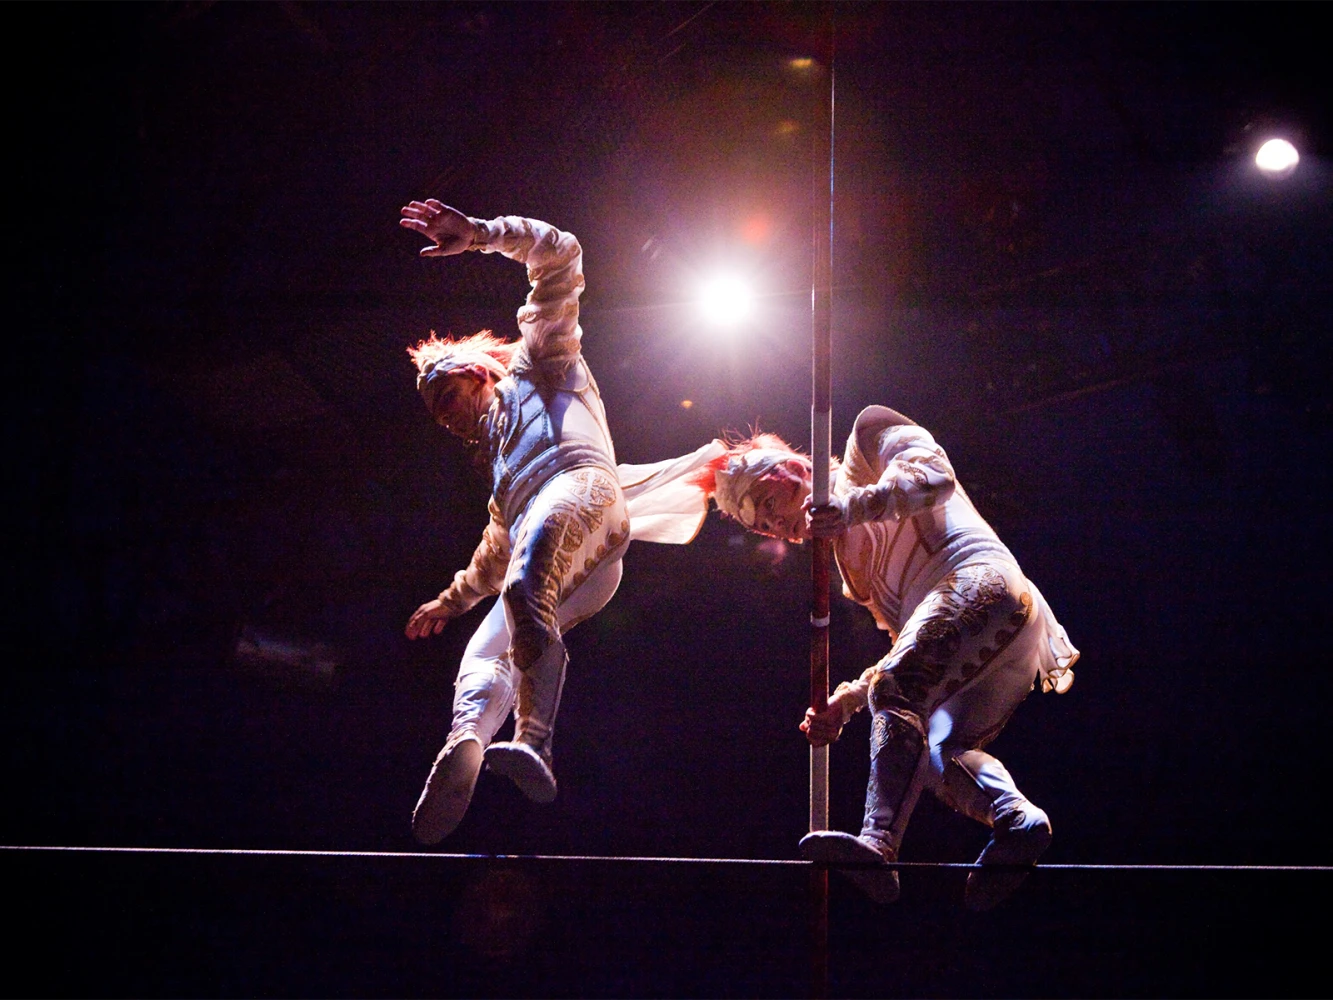 Cirque du Soleil: KOOZA - Santa Monica: What to expect - 4